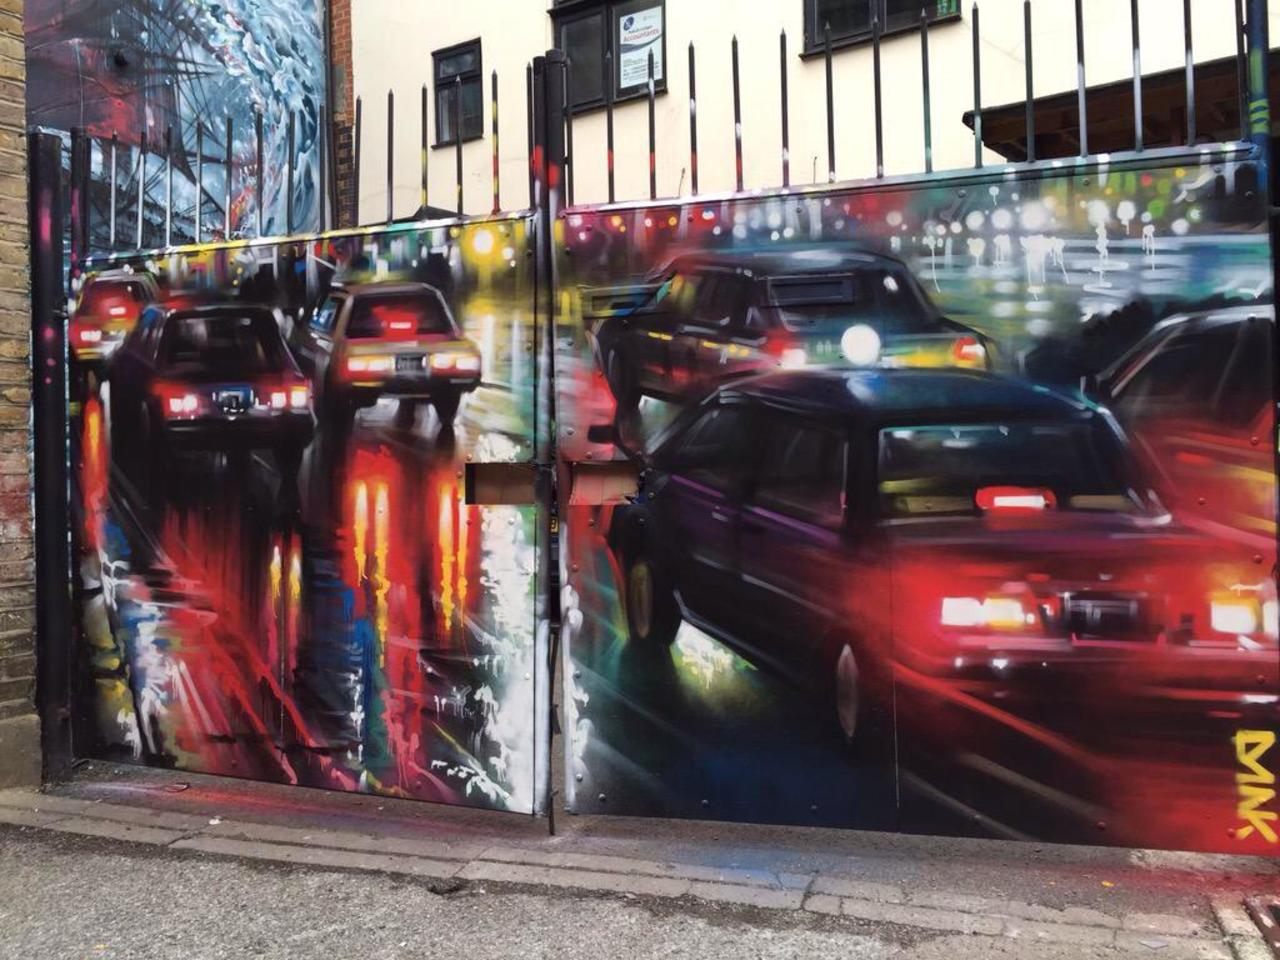 JewelNiles1: New Street Art by DanKitchener in Brick Lane London 

#art #graffiti #mural #streetart http://t.co/6MS95DSd5g